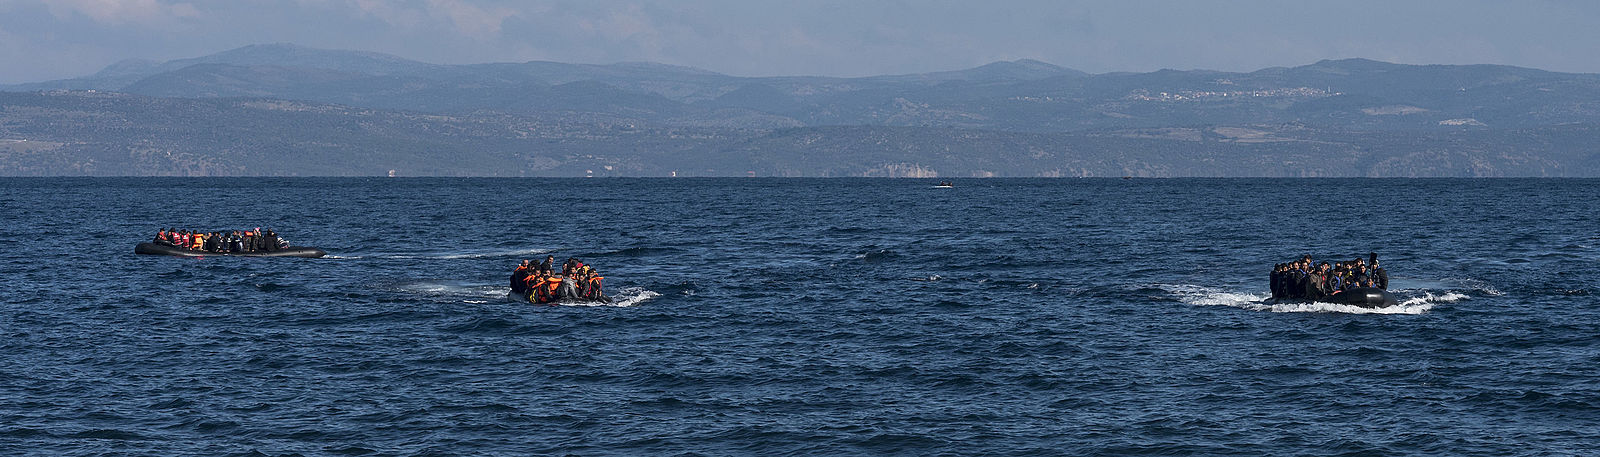 Pylos migrant boat survivors file criminal complaint, demand investigation into sinking